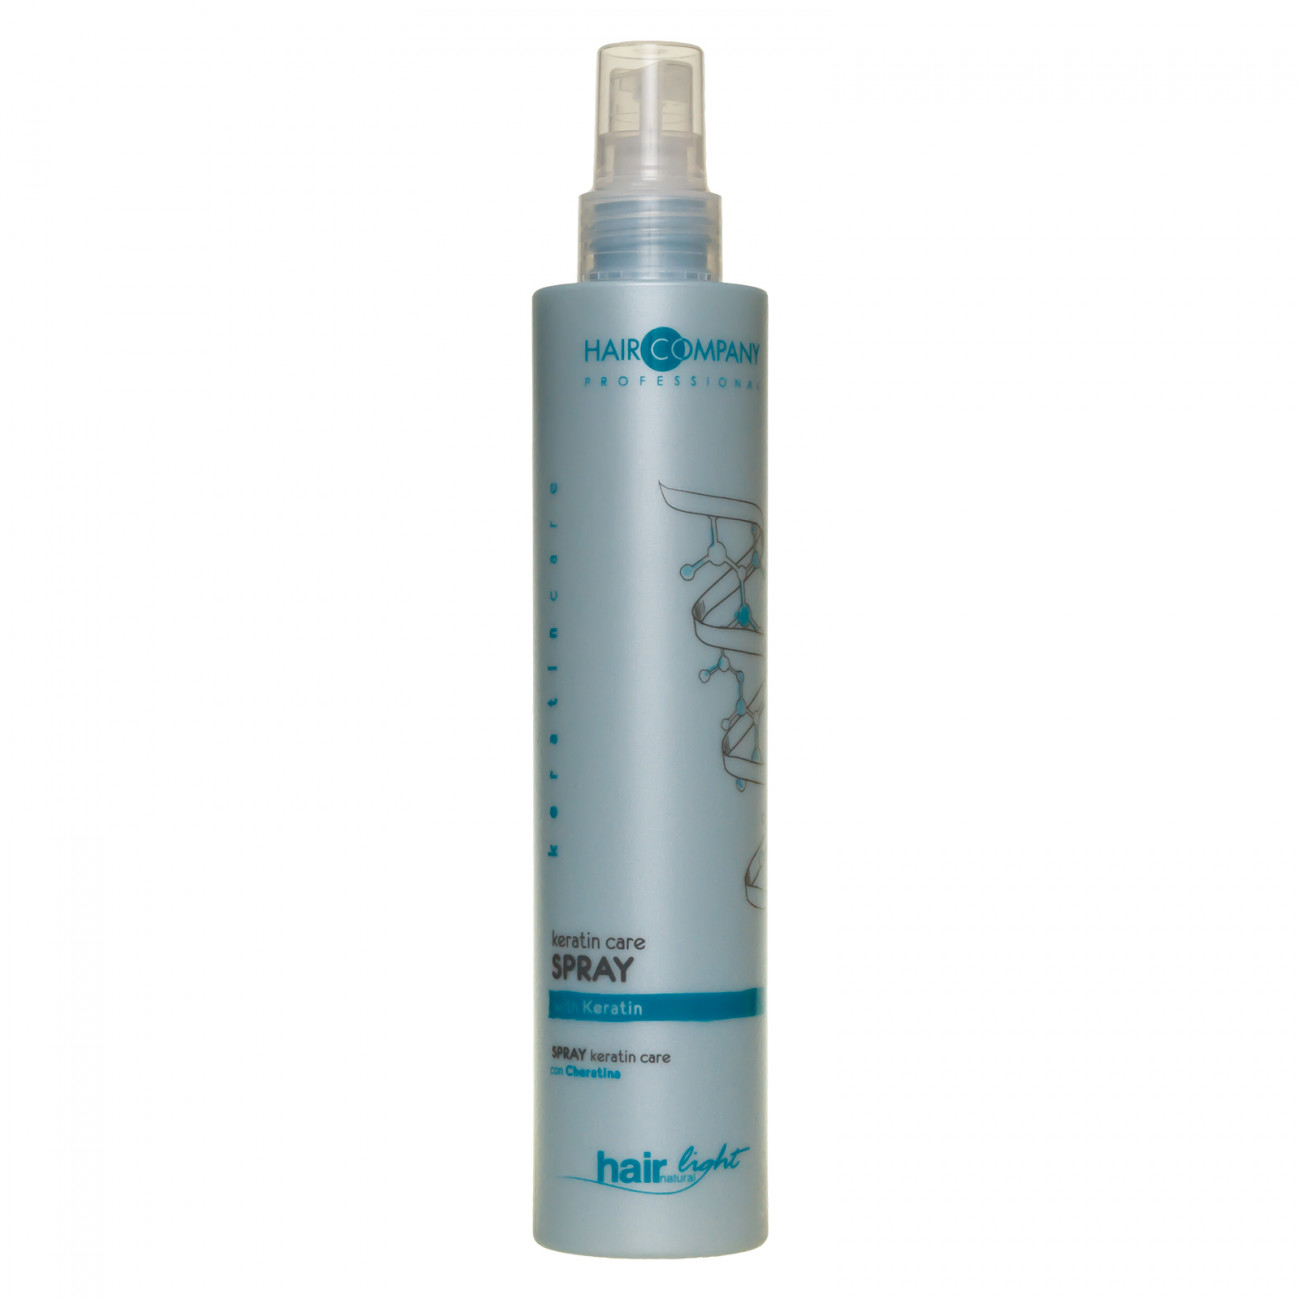 Купить Hair Company Professional Light Keratin Care Spray - Спрей-уход для волос с кератином 250 мл, Hair Company Professional (Италия)